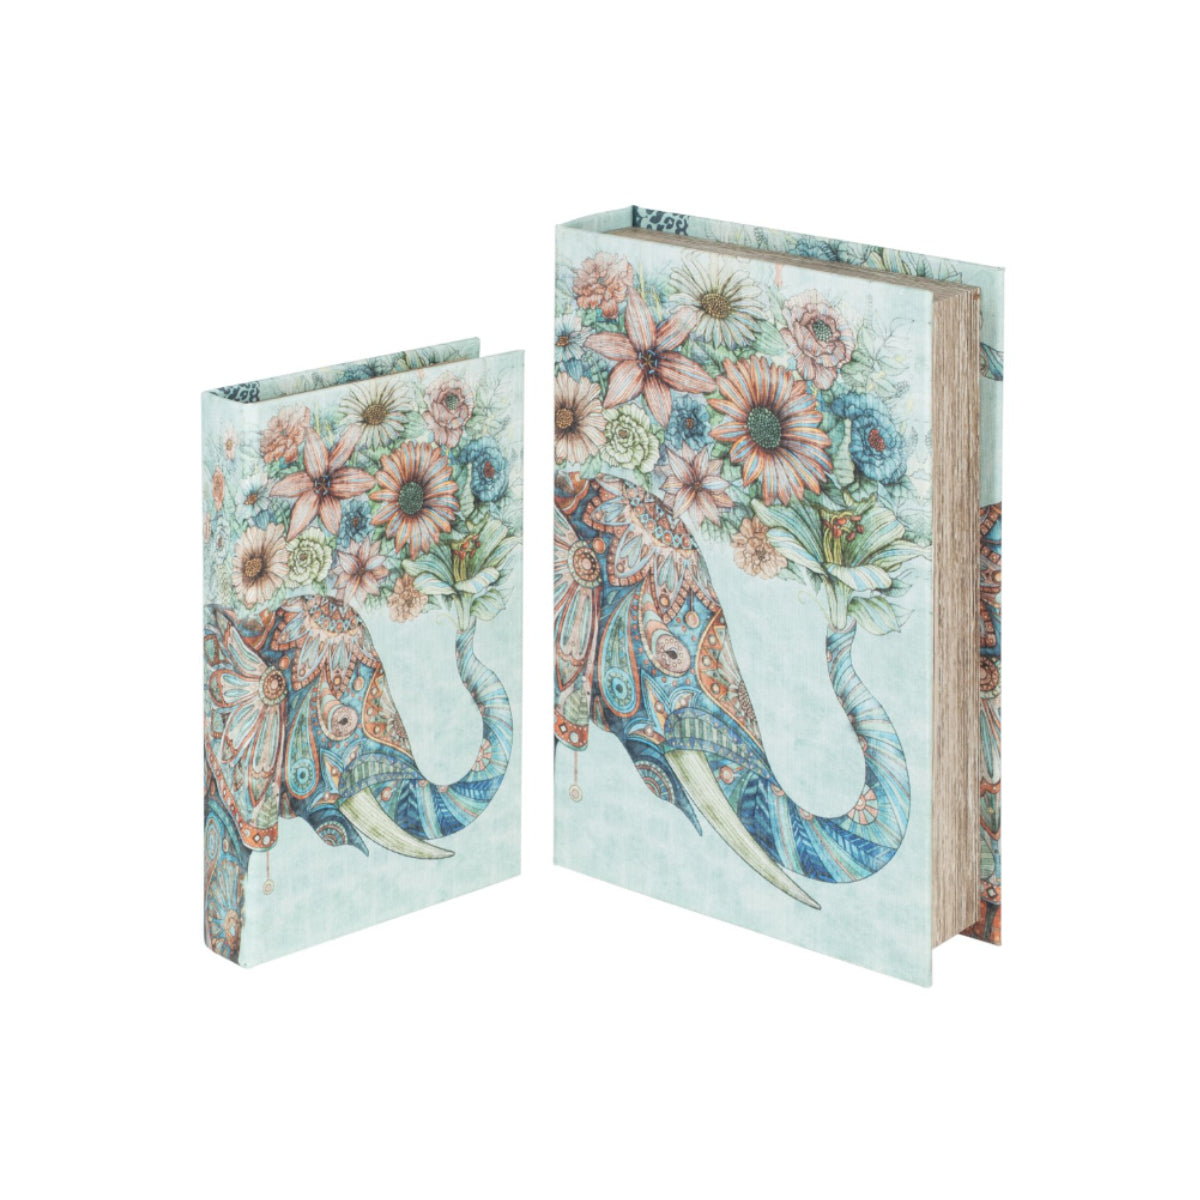 Elephant Book Box